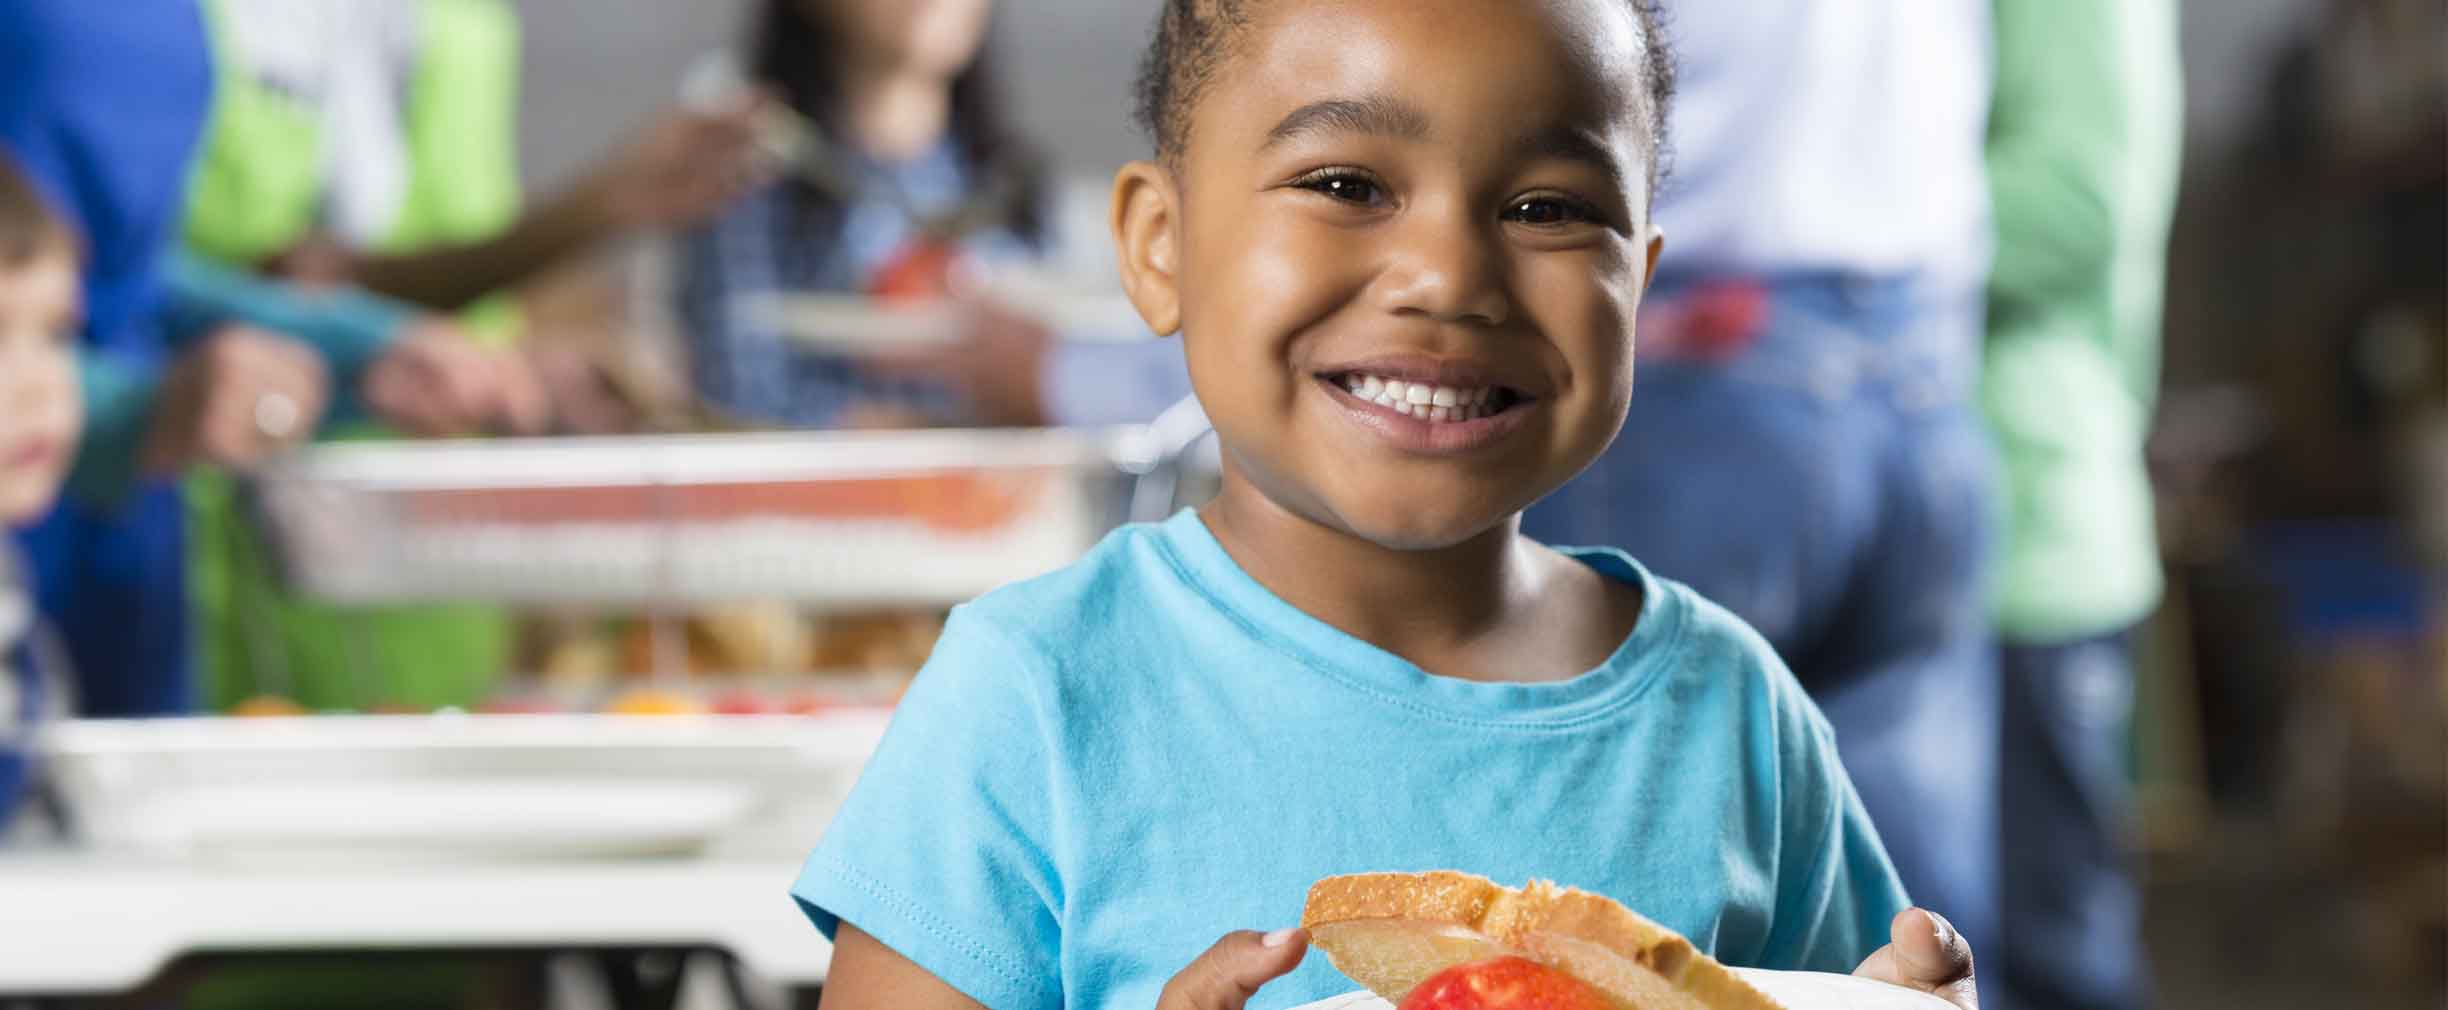 niña pequeña sonriente sosteniendo un tazón de comida en un banco de alimentos